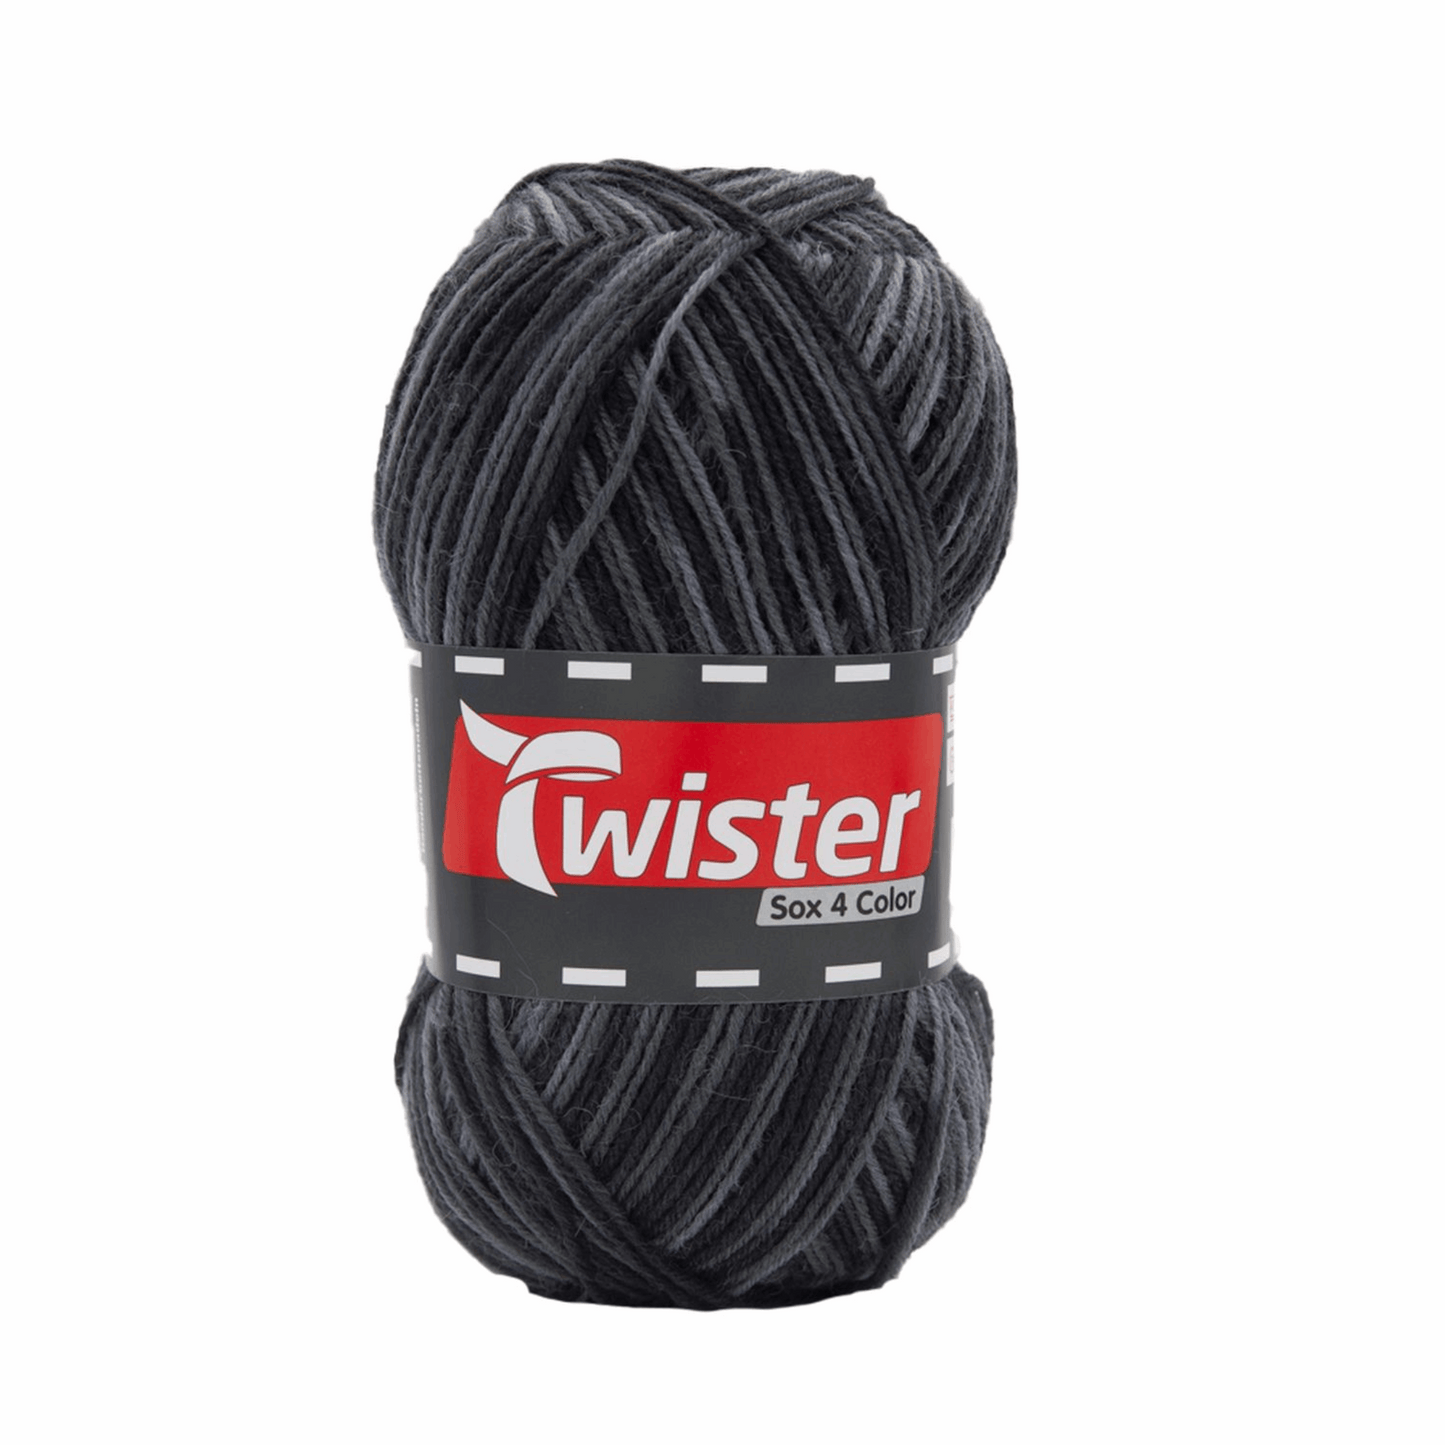 Twister Sox4 Color superwash, gray multi, 98306, color 115